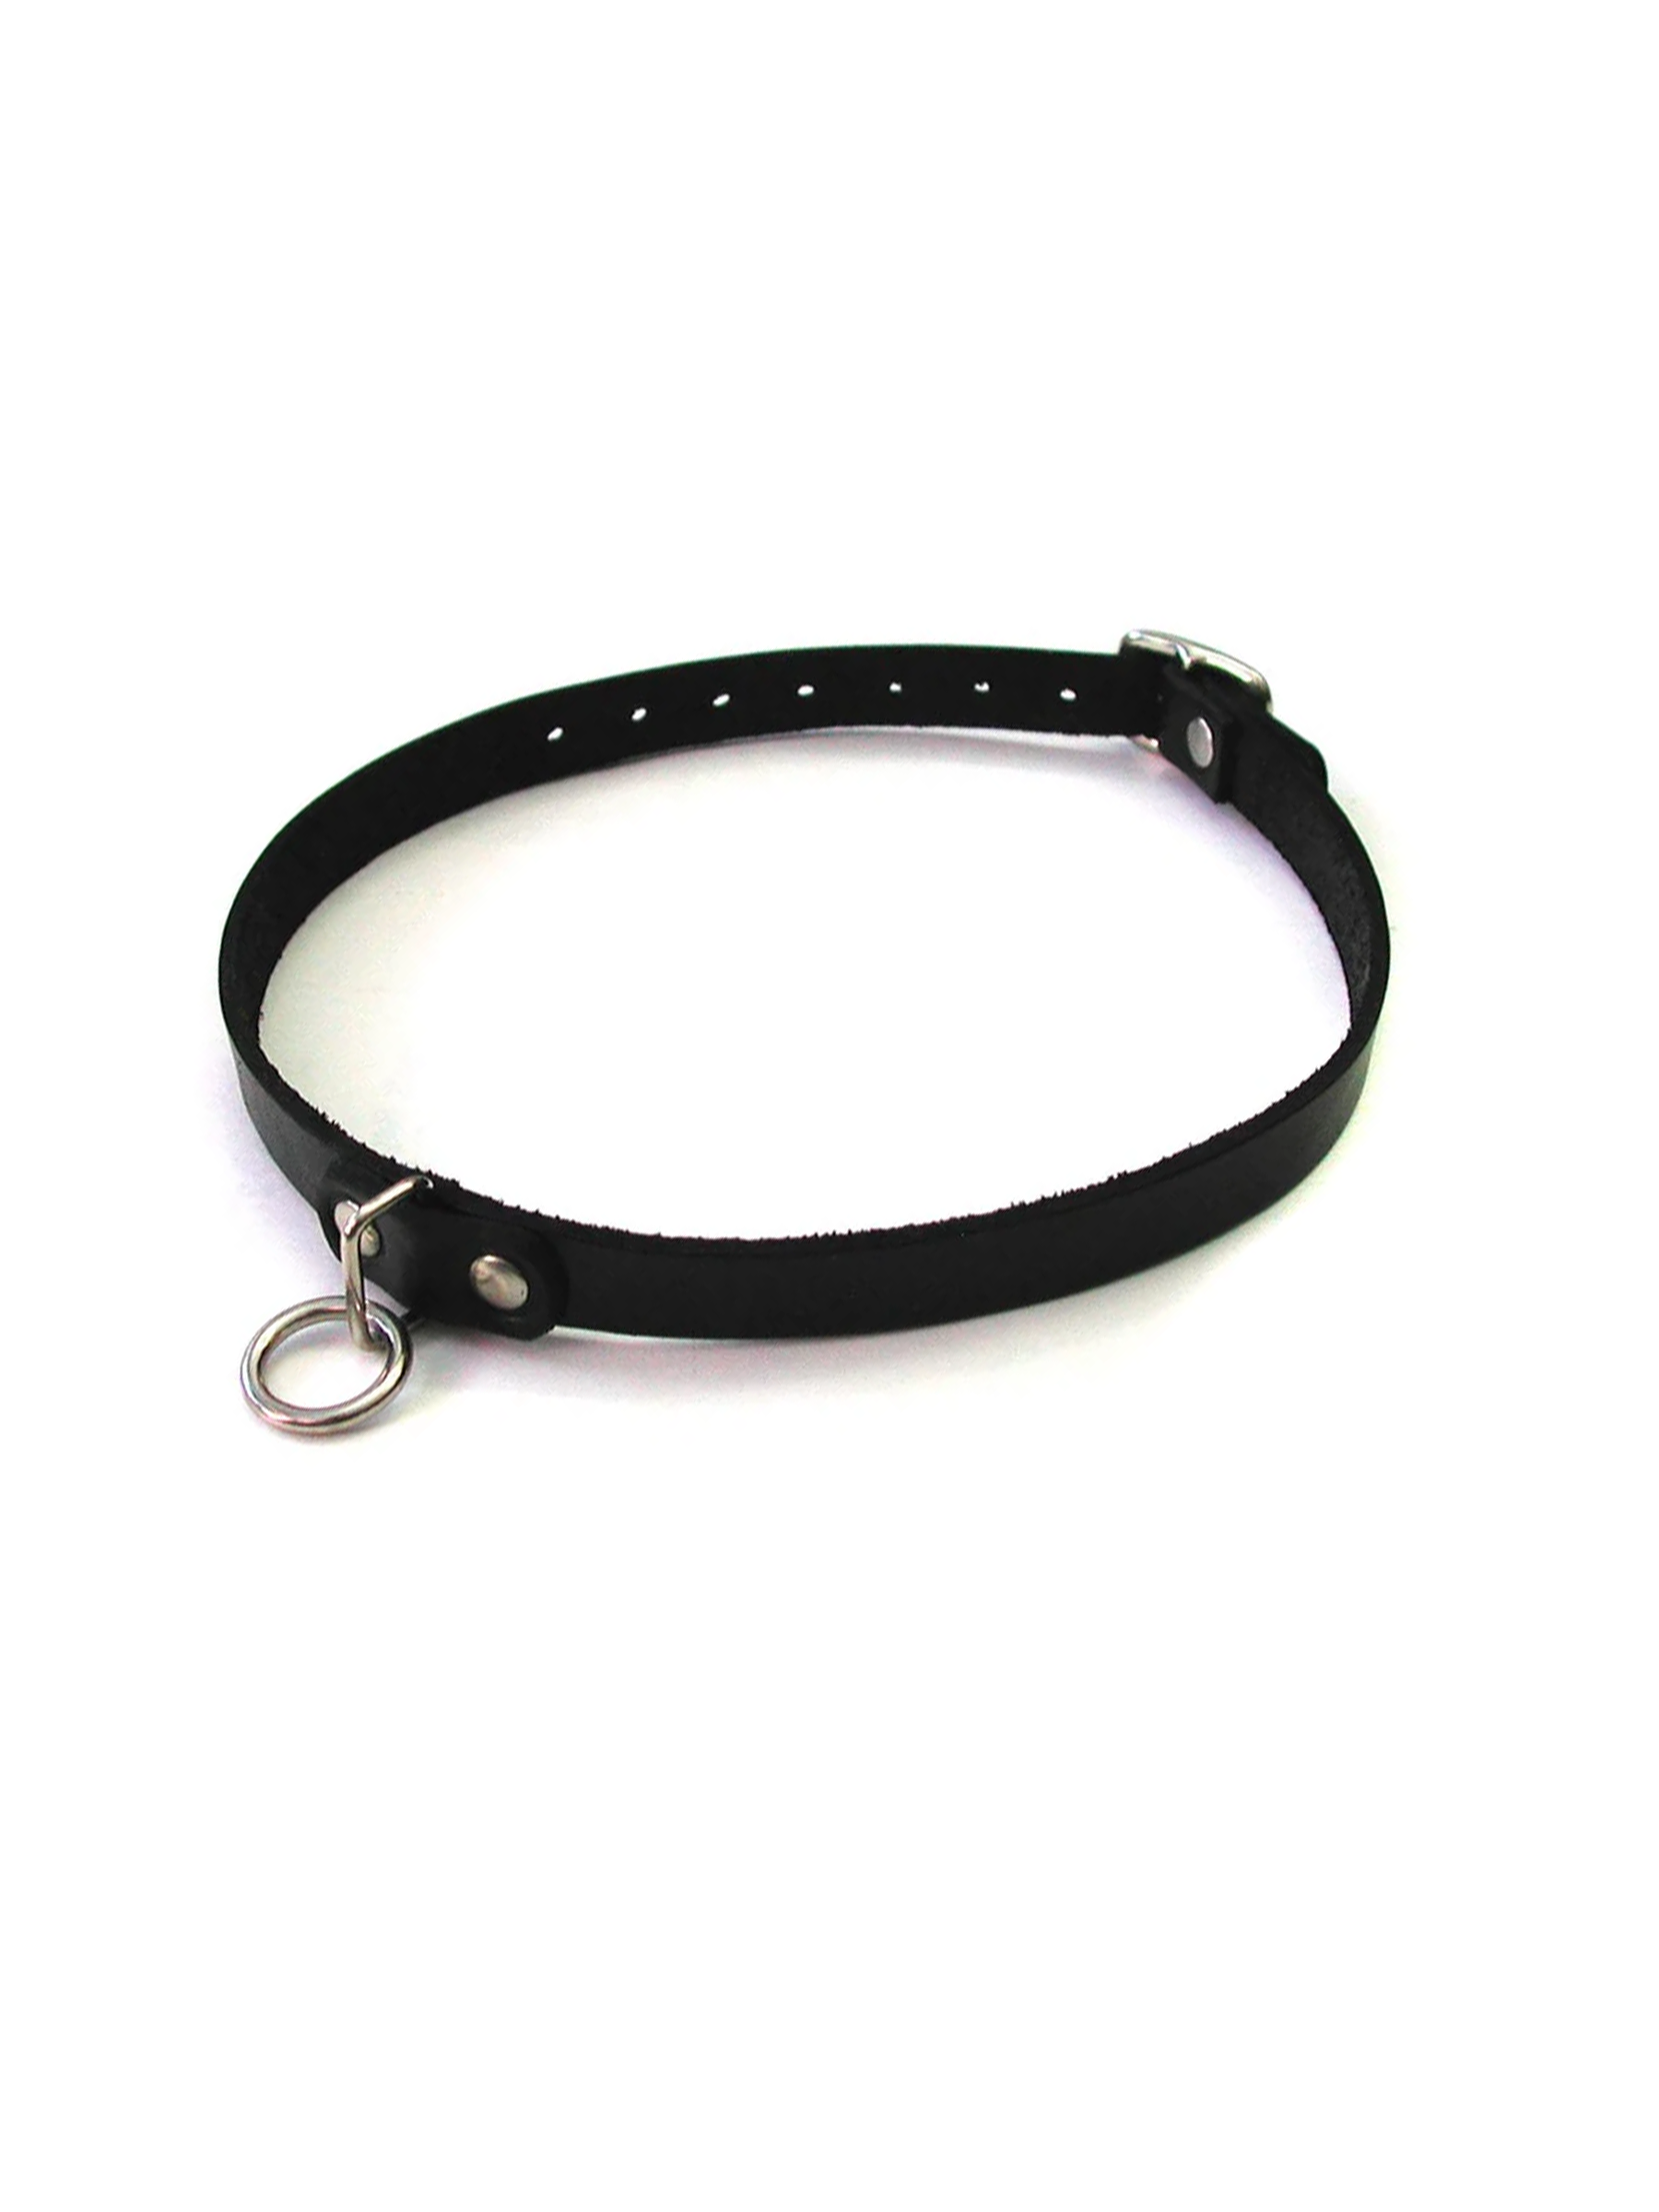 Stockroom Leather Choker Collar in Black